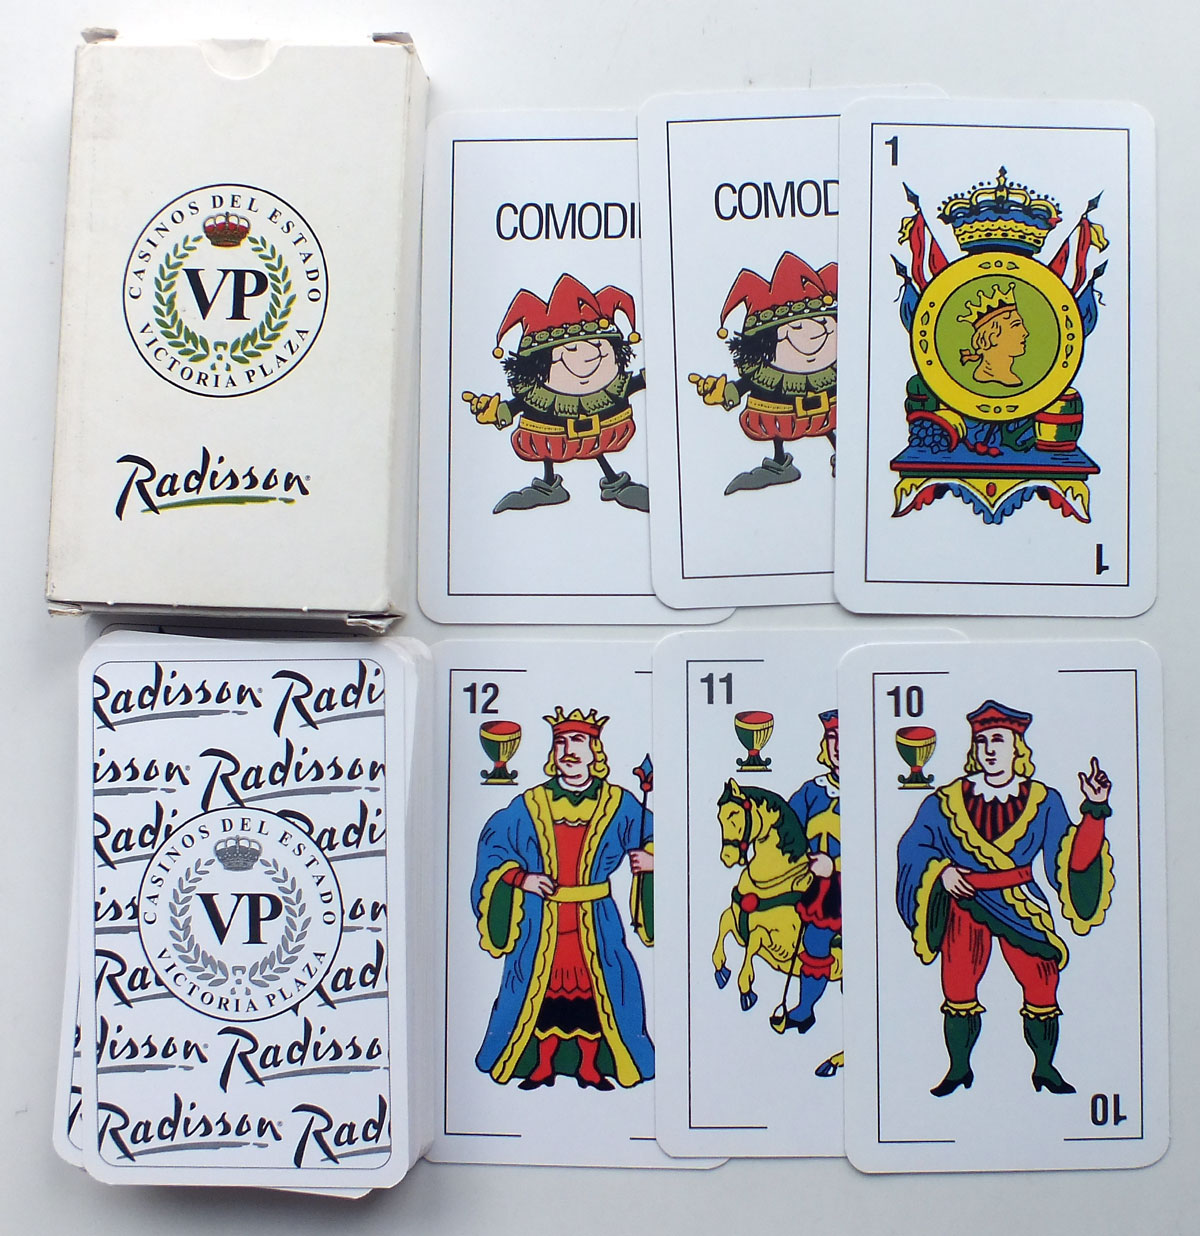 Playing cards for Radisson Hotels - Casinos del Estado - Victoria Plaza, Montevideo, Uruguay, c.2009